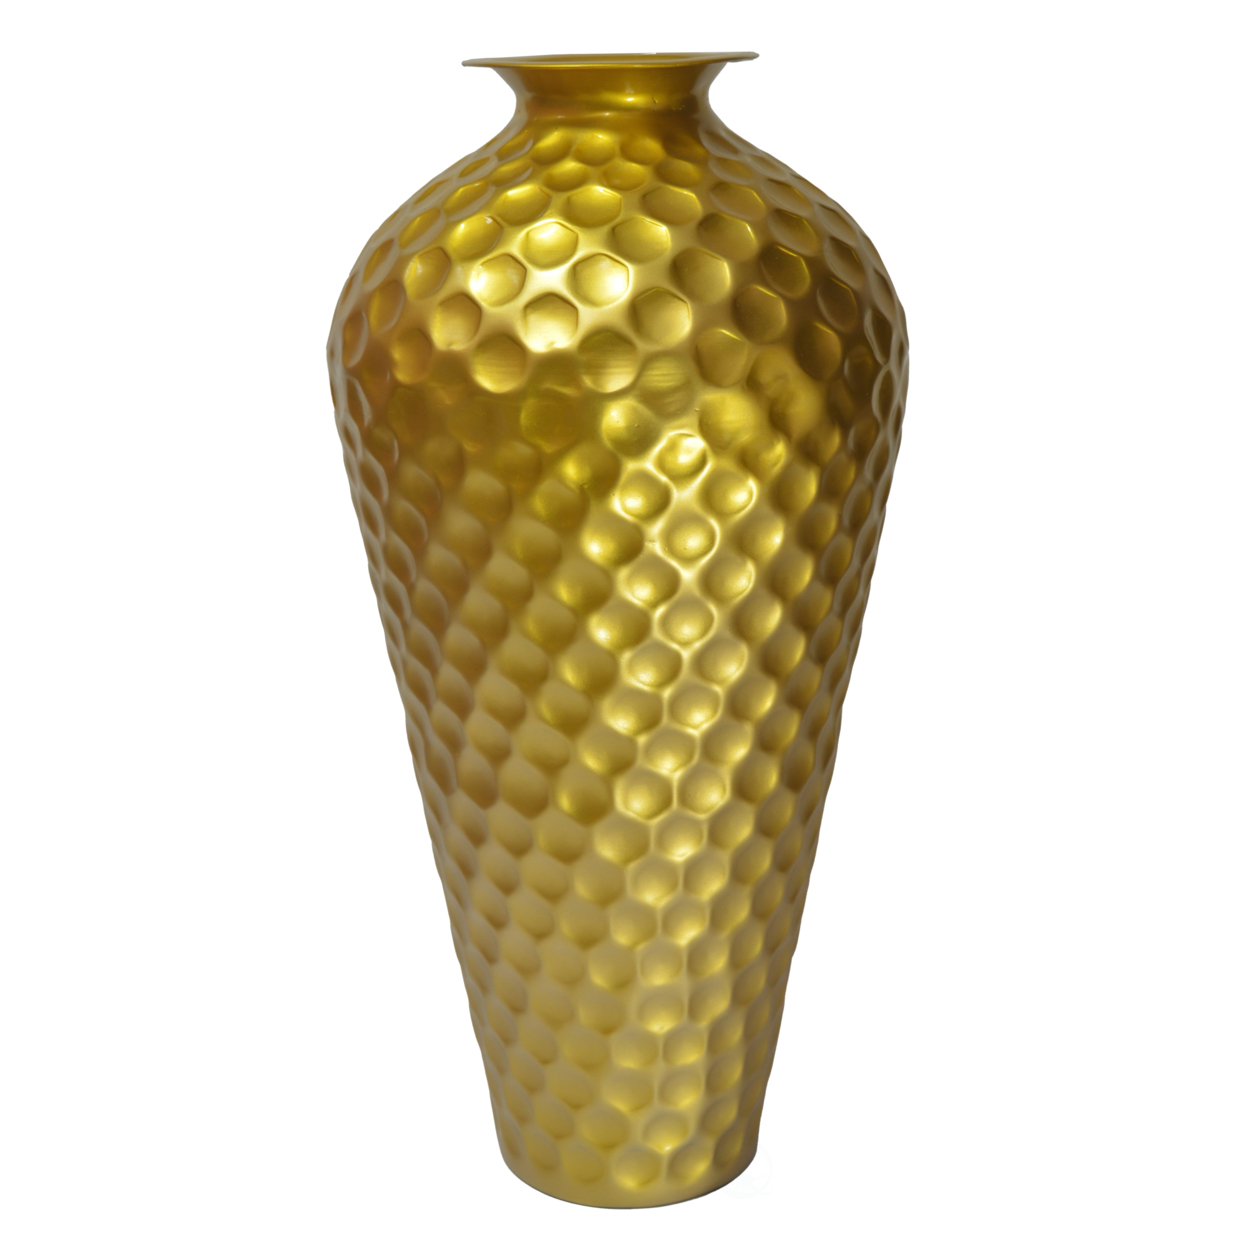 Decorative Modern Gold Metal Honeycomb Design Floor Flower Vase For Entryway, Living Room Or Dining Room